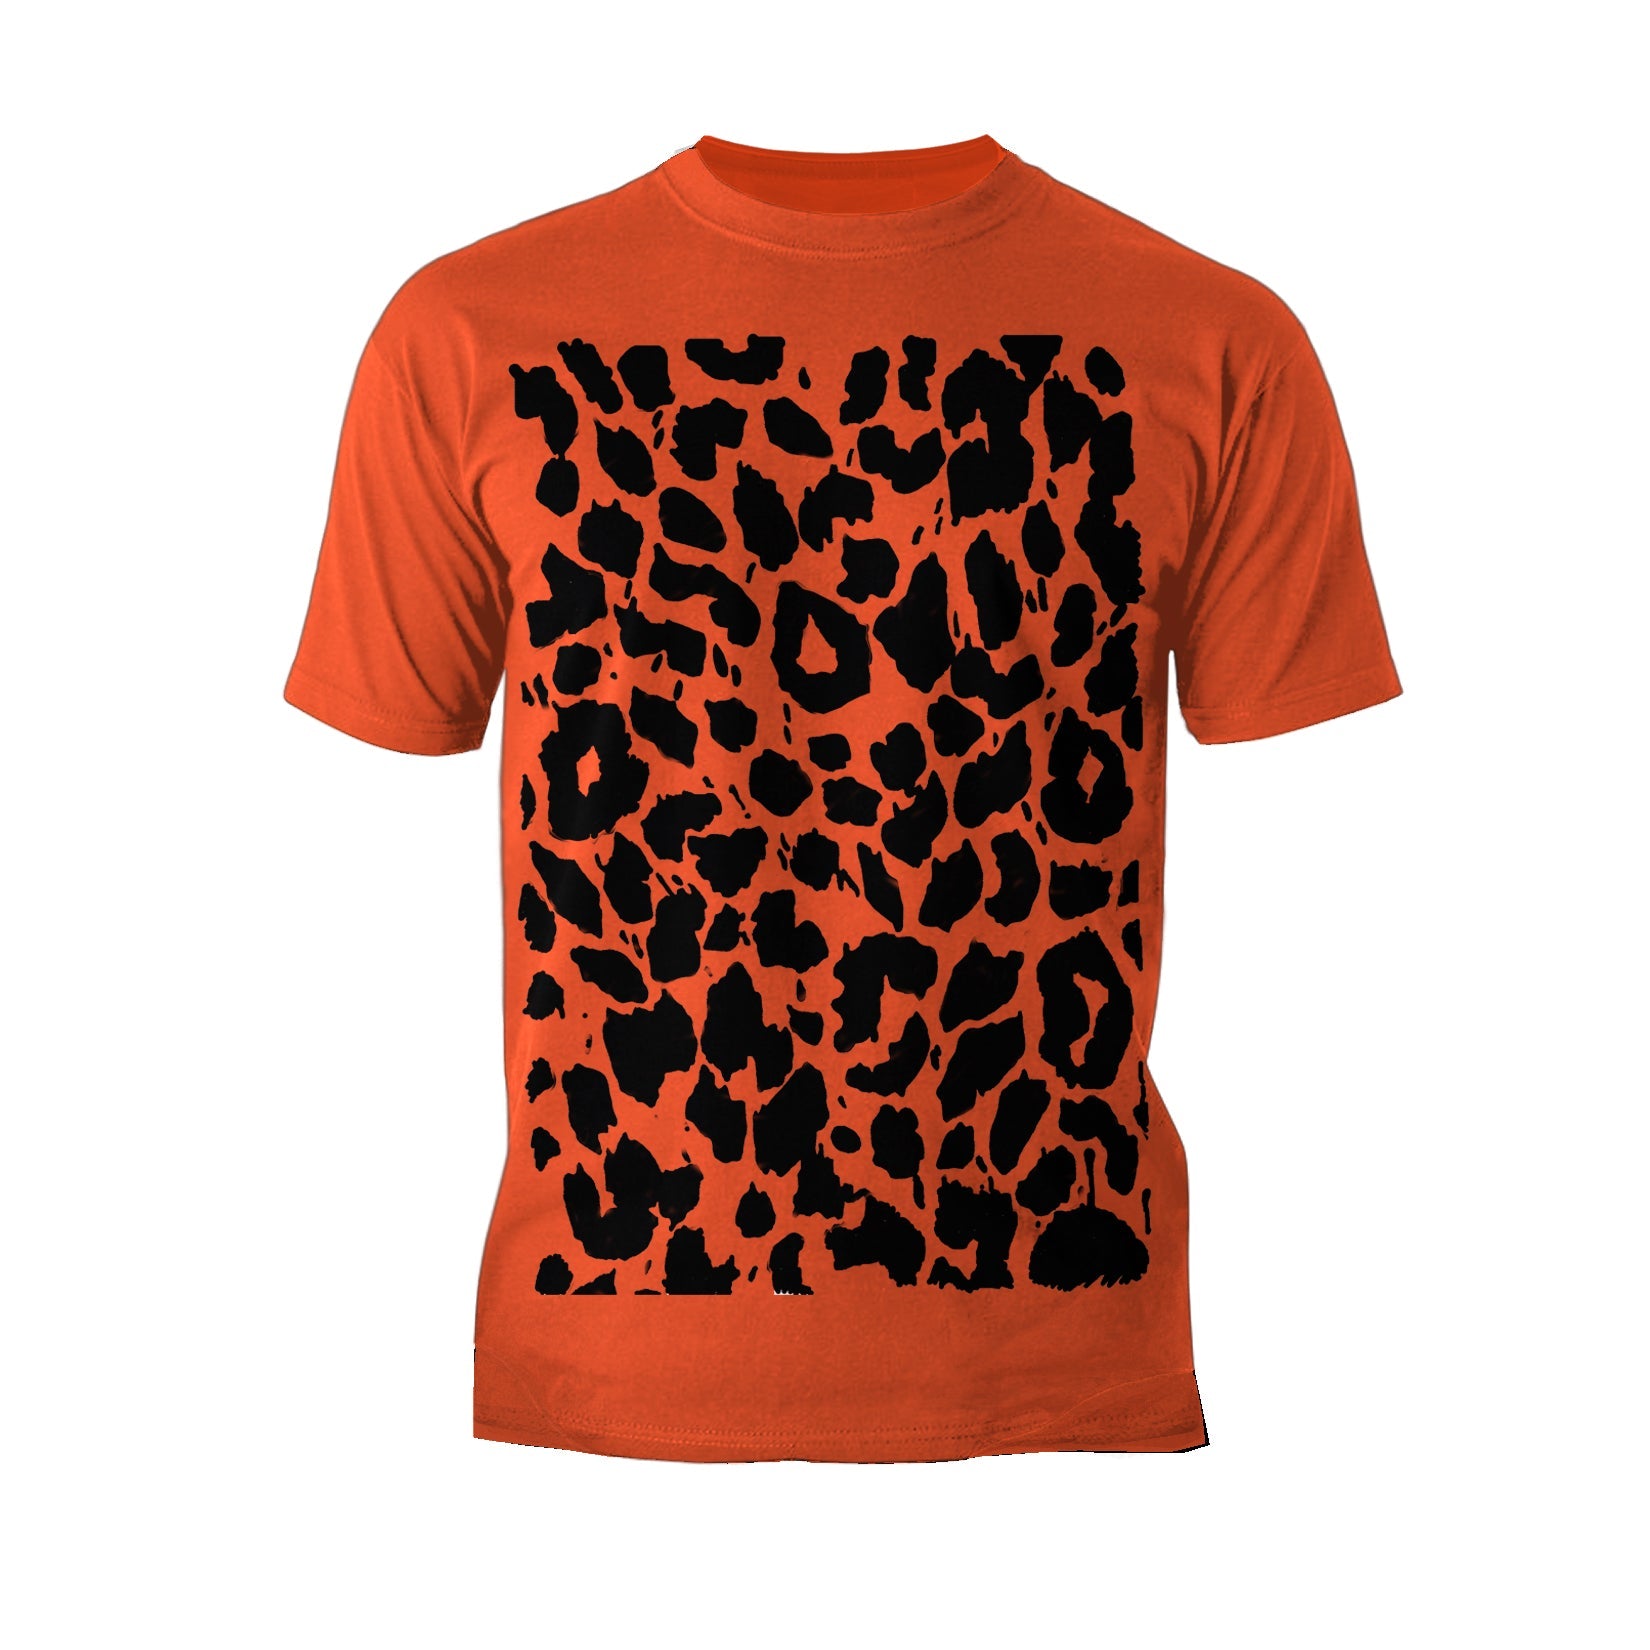 US Brand X Old's Kool Leopard Print Official Men's T-Shirt ()